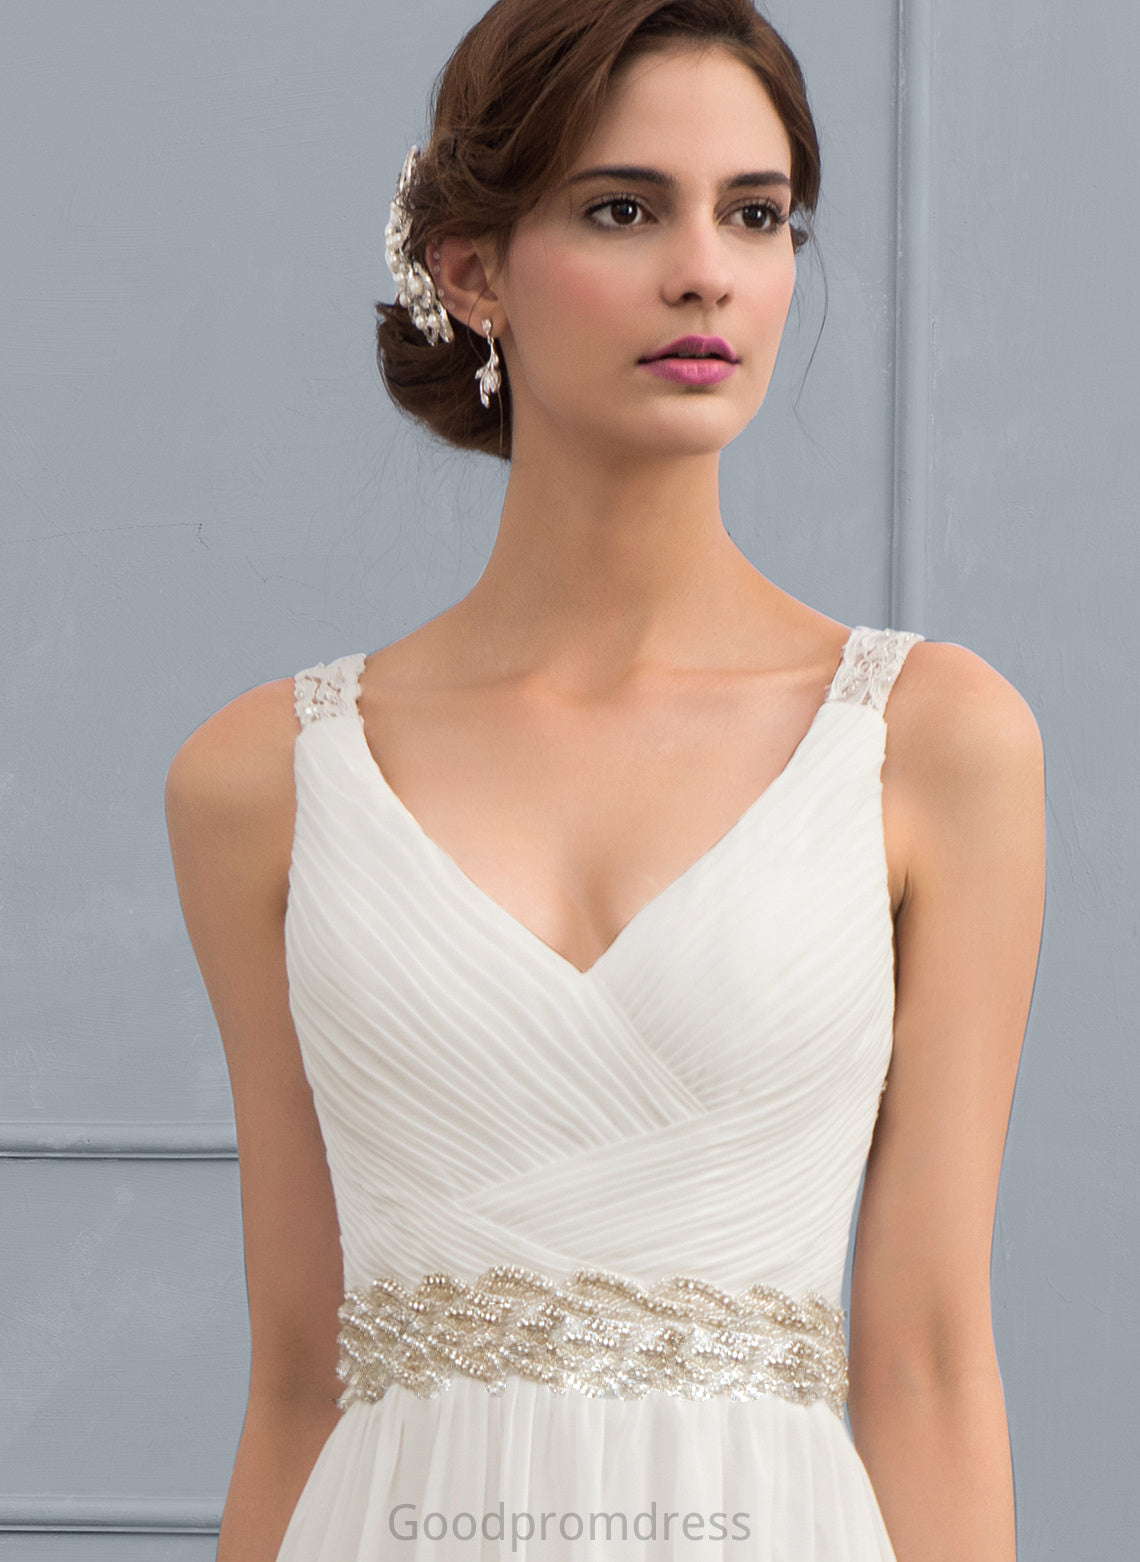 Sequins Train Sweep Wedding Dresses Dress Ruffle A-Line Beading Lace V-neck Diana Chiffon With Wedding